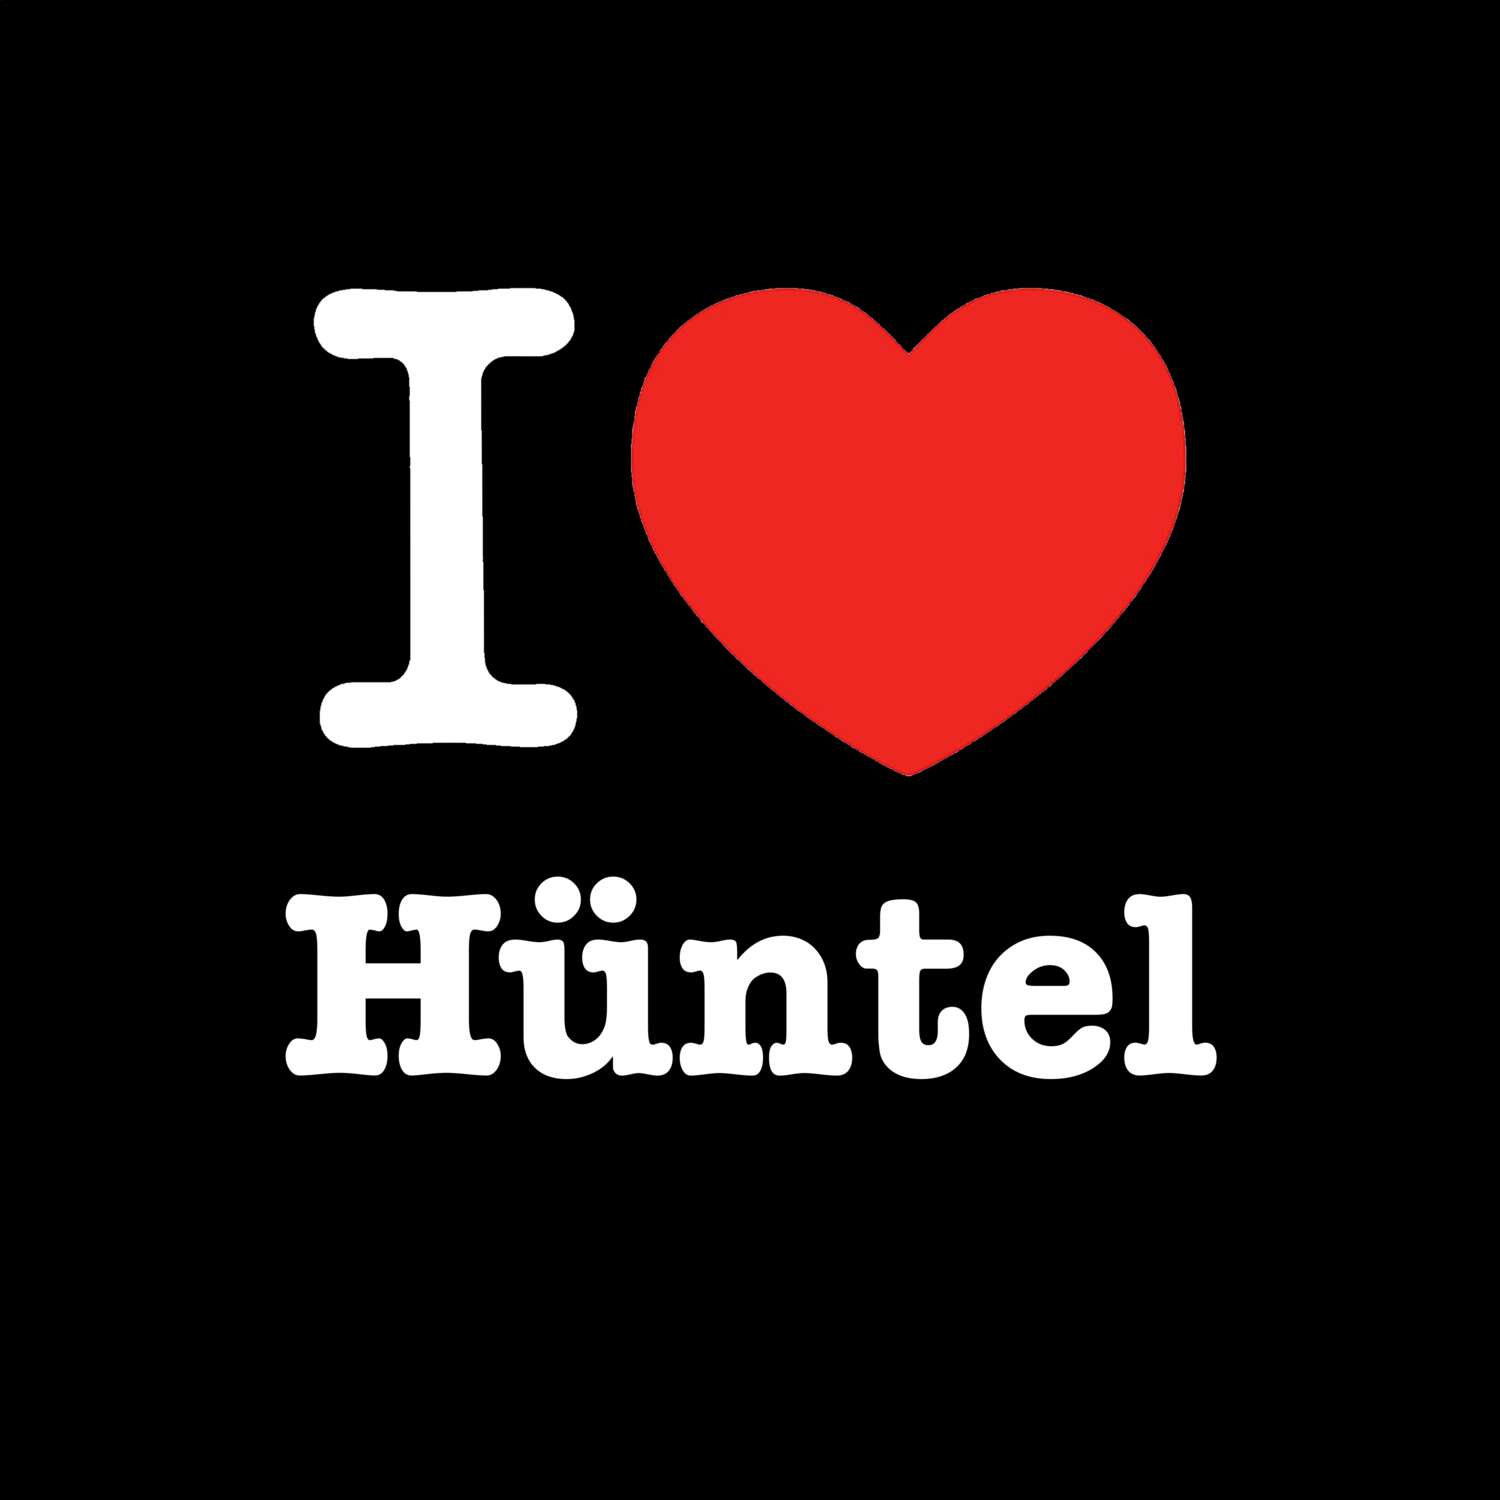 Hüntel T-Shirt »I love«